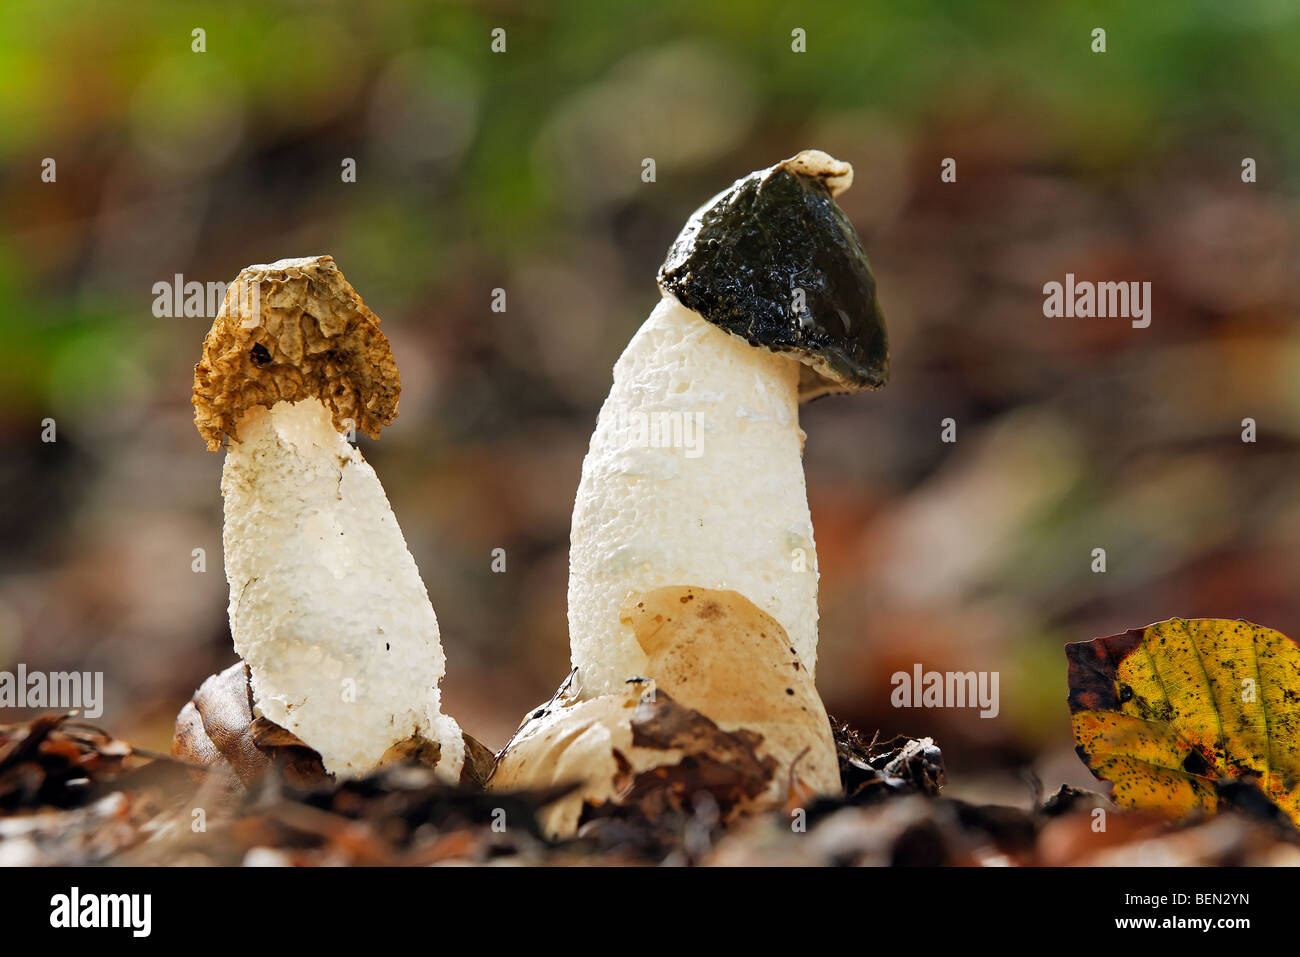 Common stinkhorn / dickes-nipes (Phallus impudicus) in broadleaf forest Stock Photo